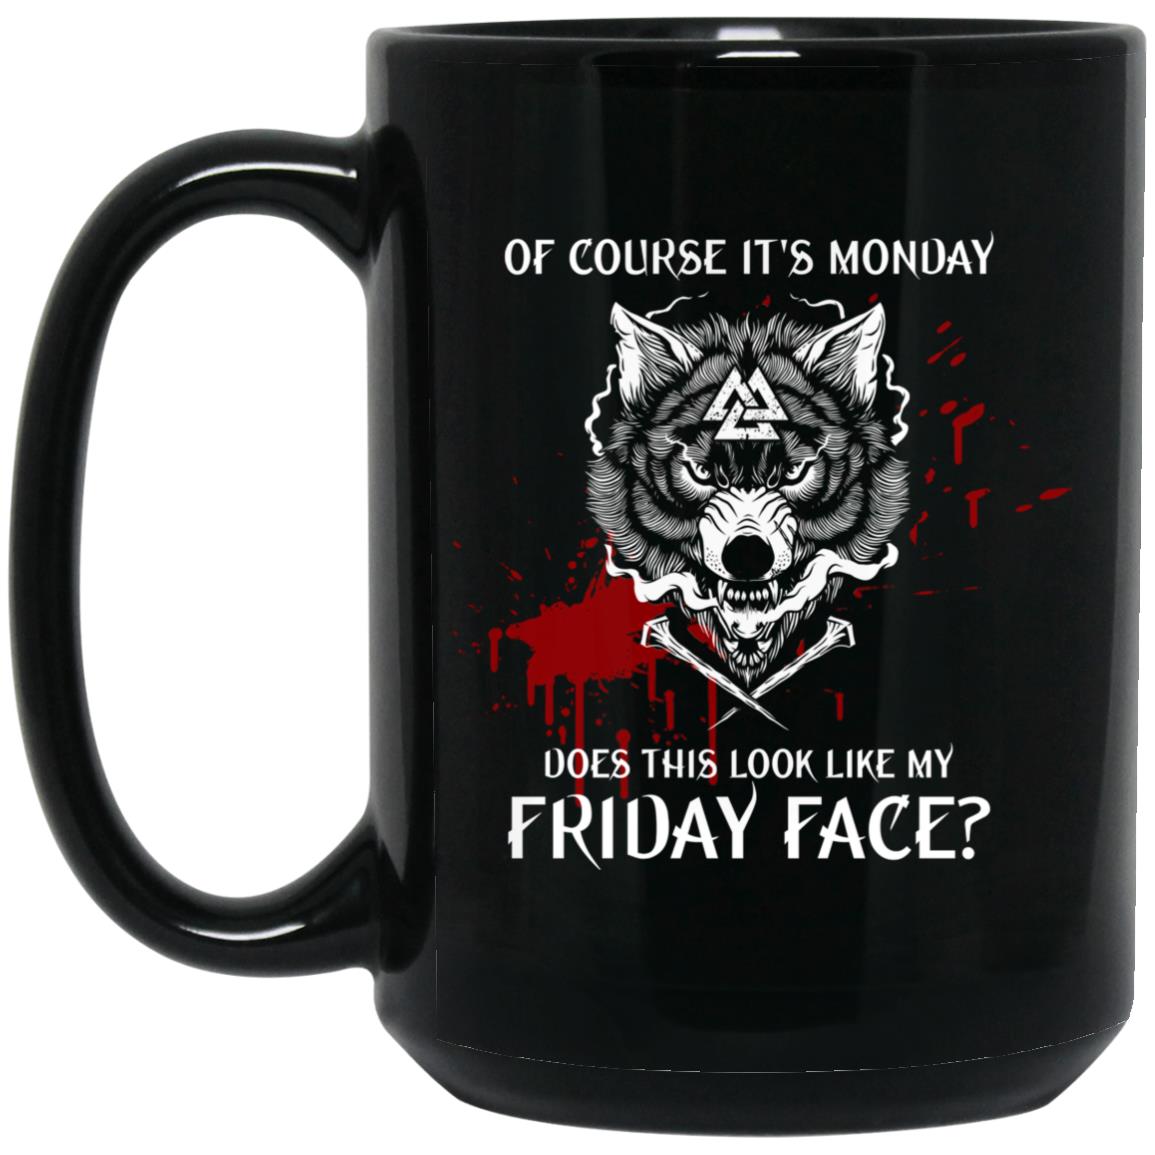 It's Monday, Funny Berserker Viking T-shirt, Hoodie, Mug